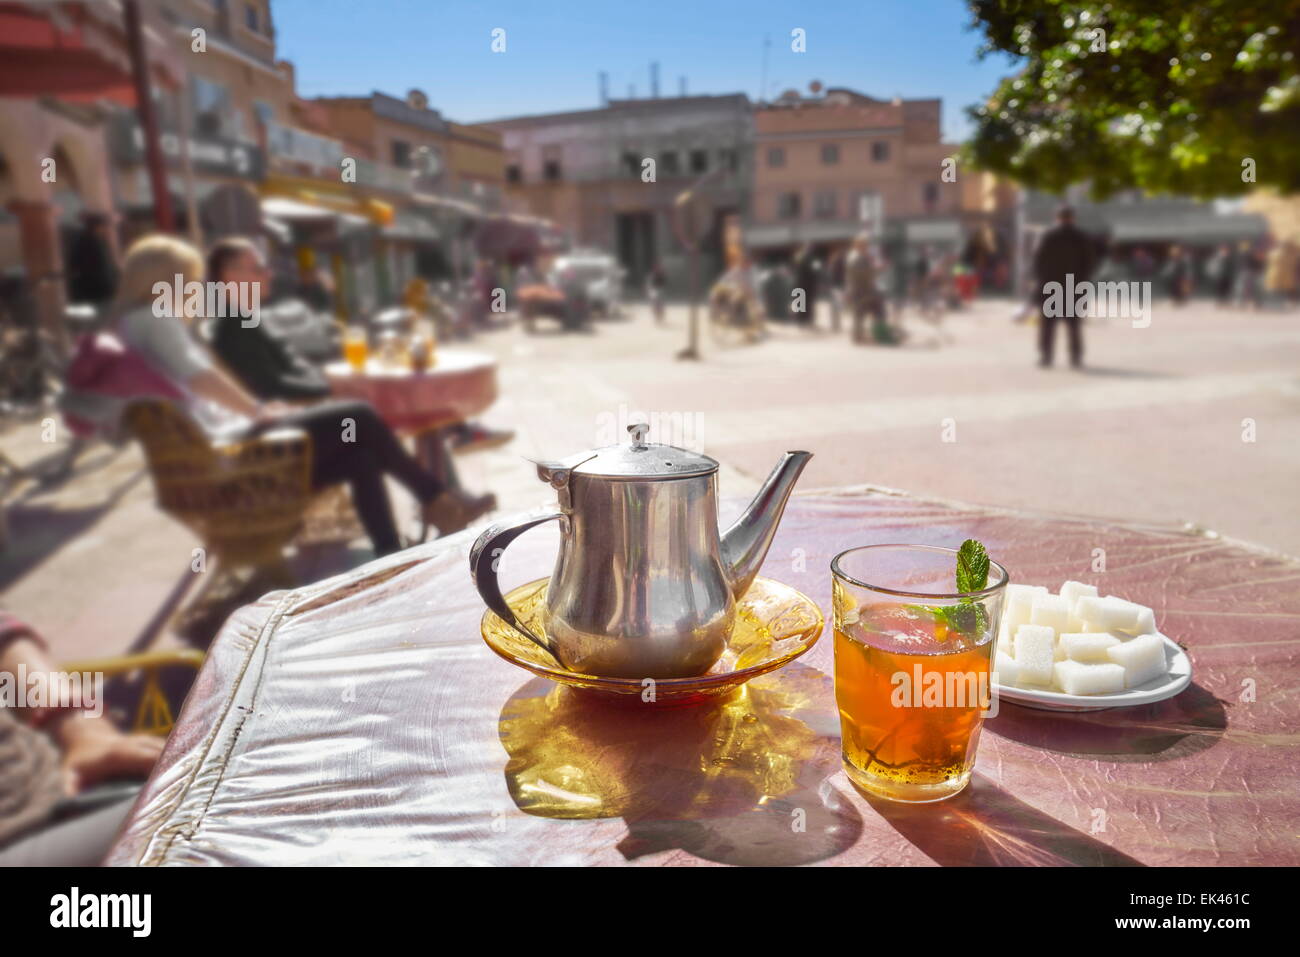 Traditionelle marokkanische Minze Tee im Glas mit Tee Topf, Marokko, Afrika  Stockfotografie - Alamy